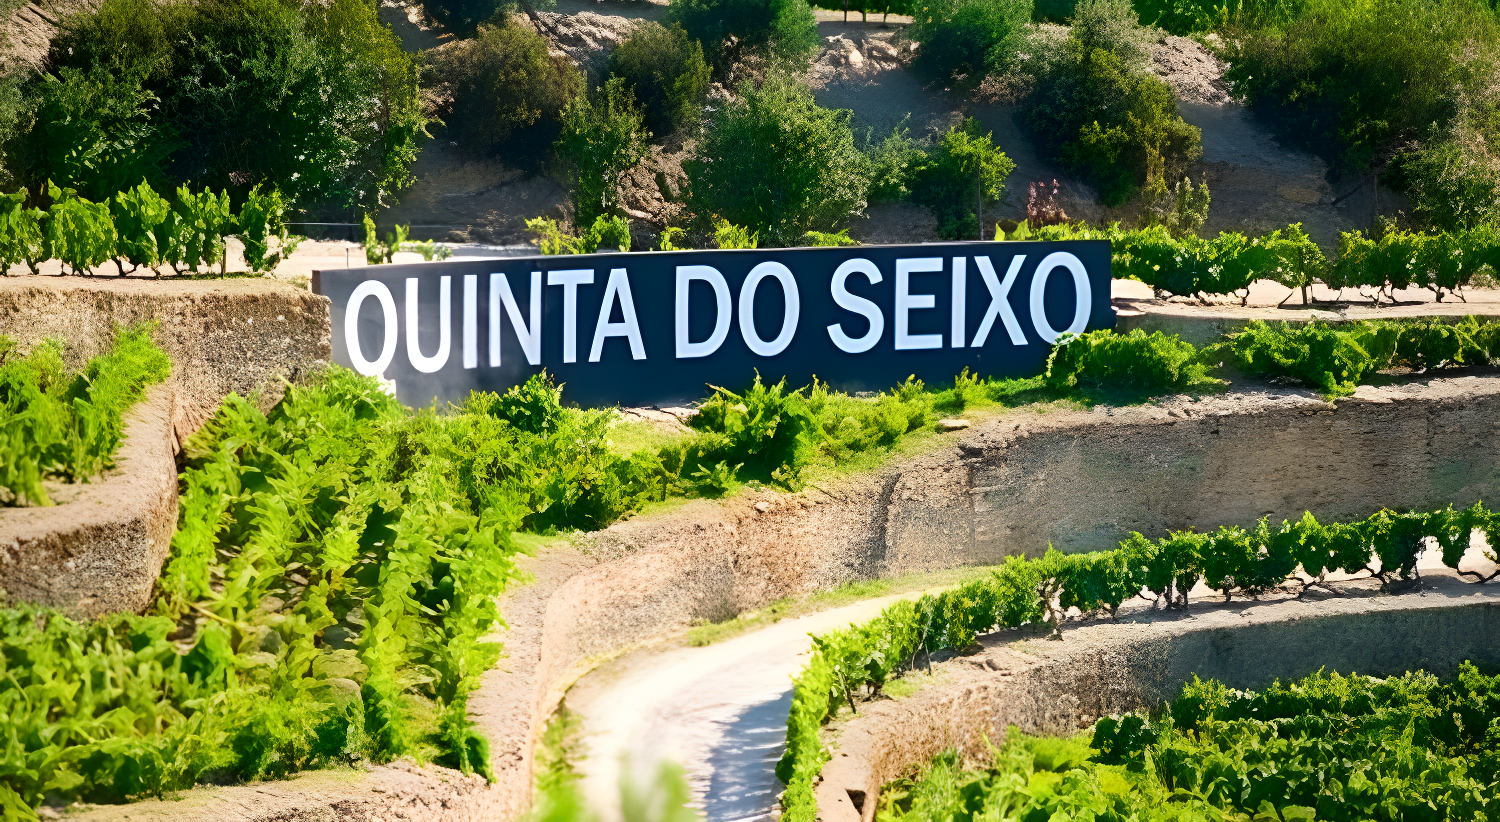 Quinta do Seixo: A special invitation to the Harvest